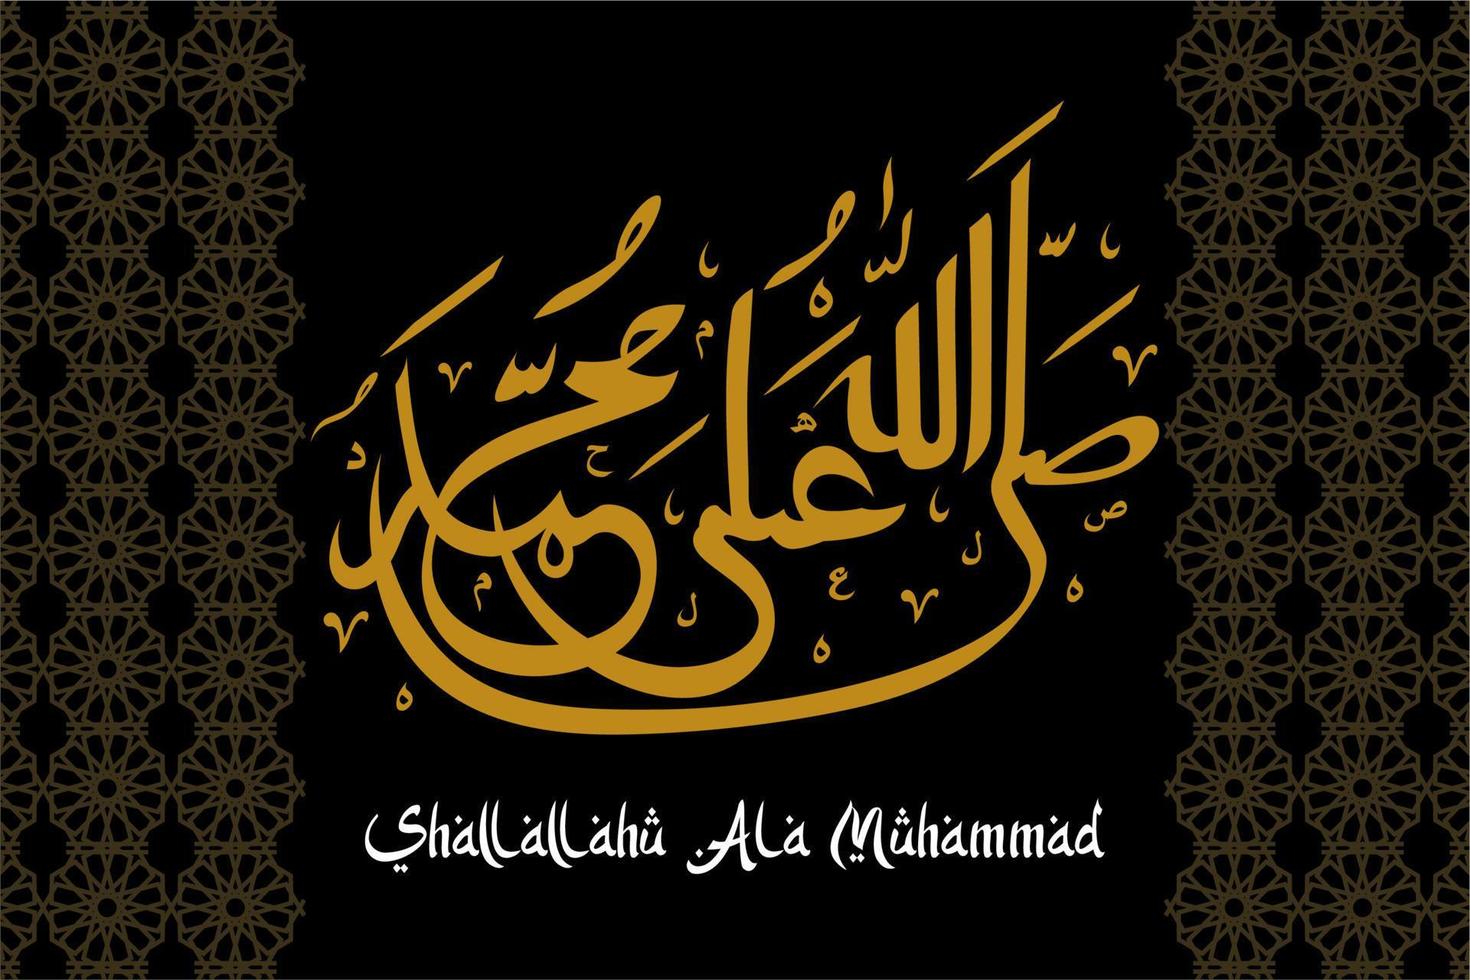 Shalallahu ala muhammad caligrafia árabe traduzida deus abençoe muhammad. papel de parede vetor syaria